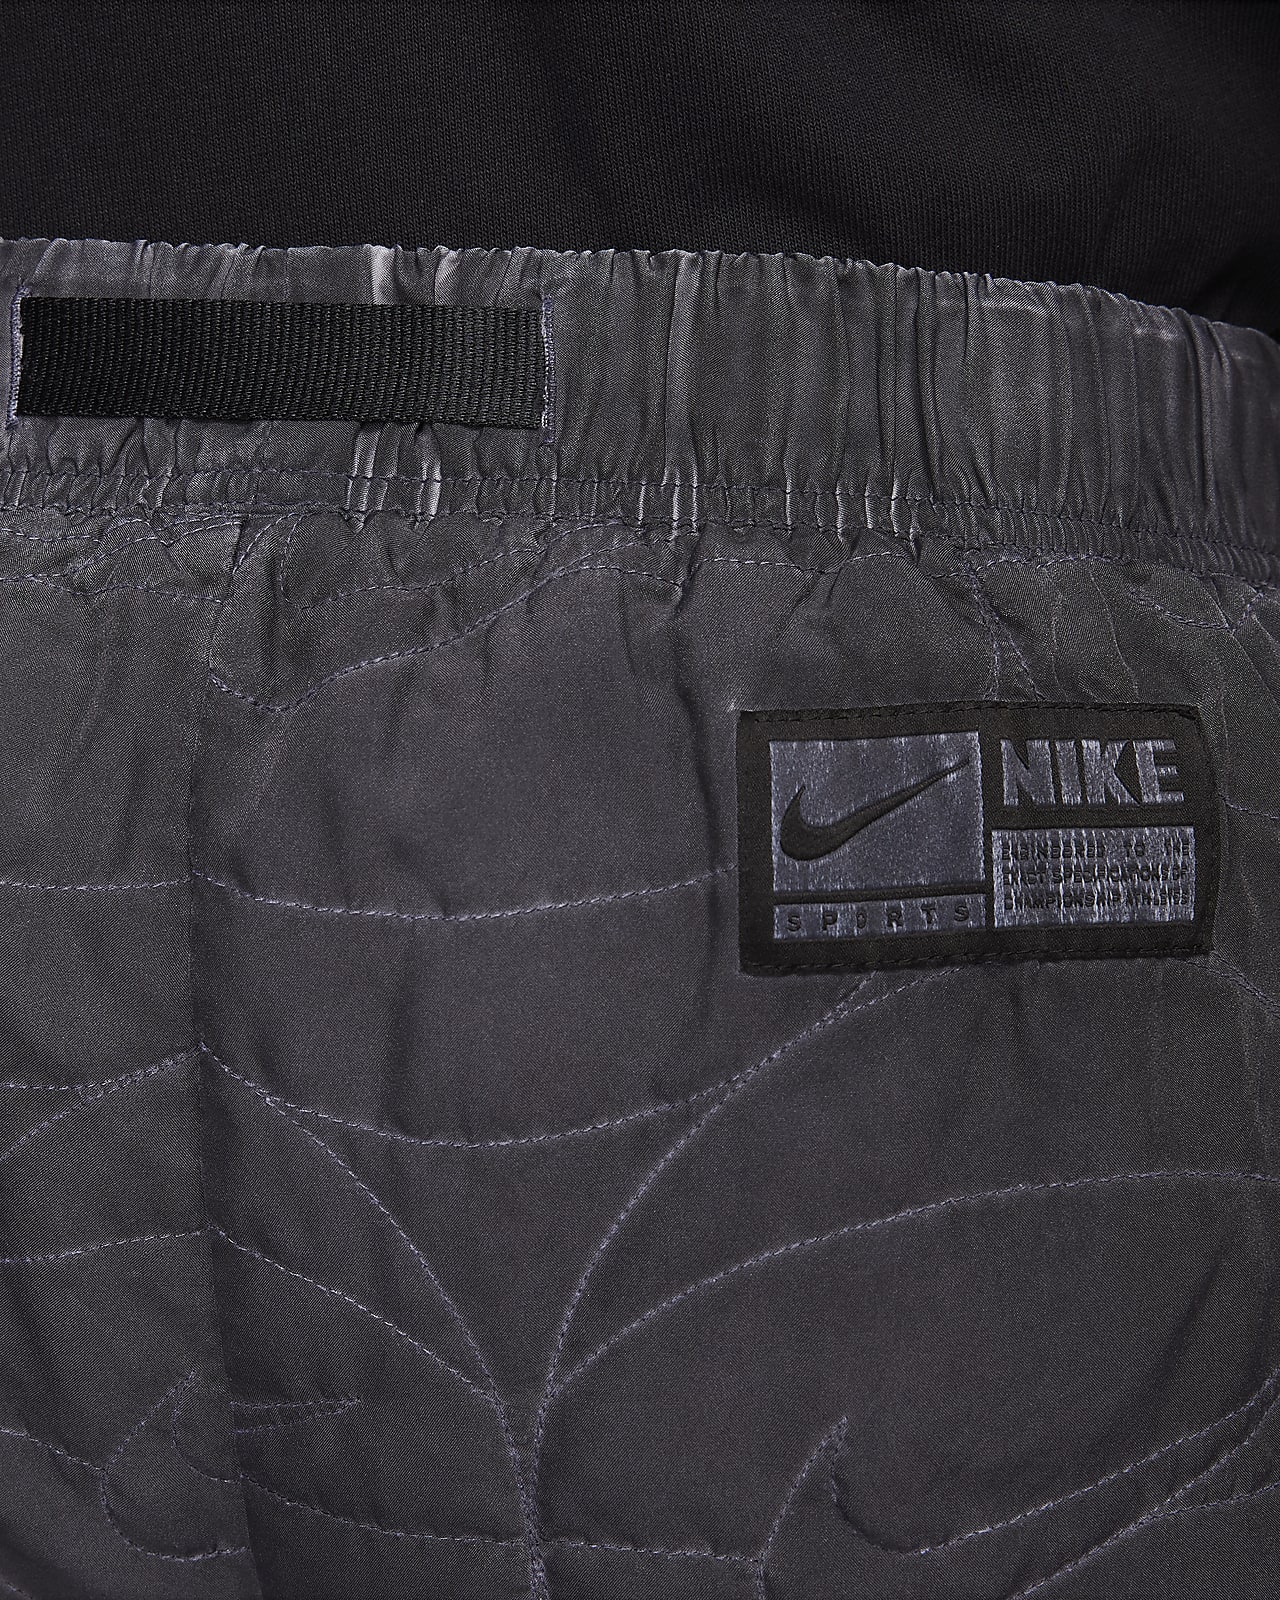 Men's Nike Lwt Track Pant Casual Sports Lacing Woven Long Pants/Trousers  Autumn Black DA5679-010